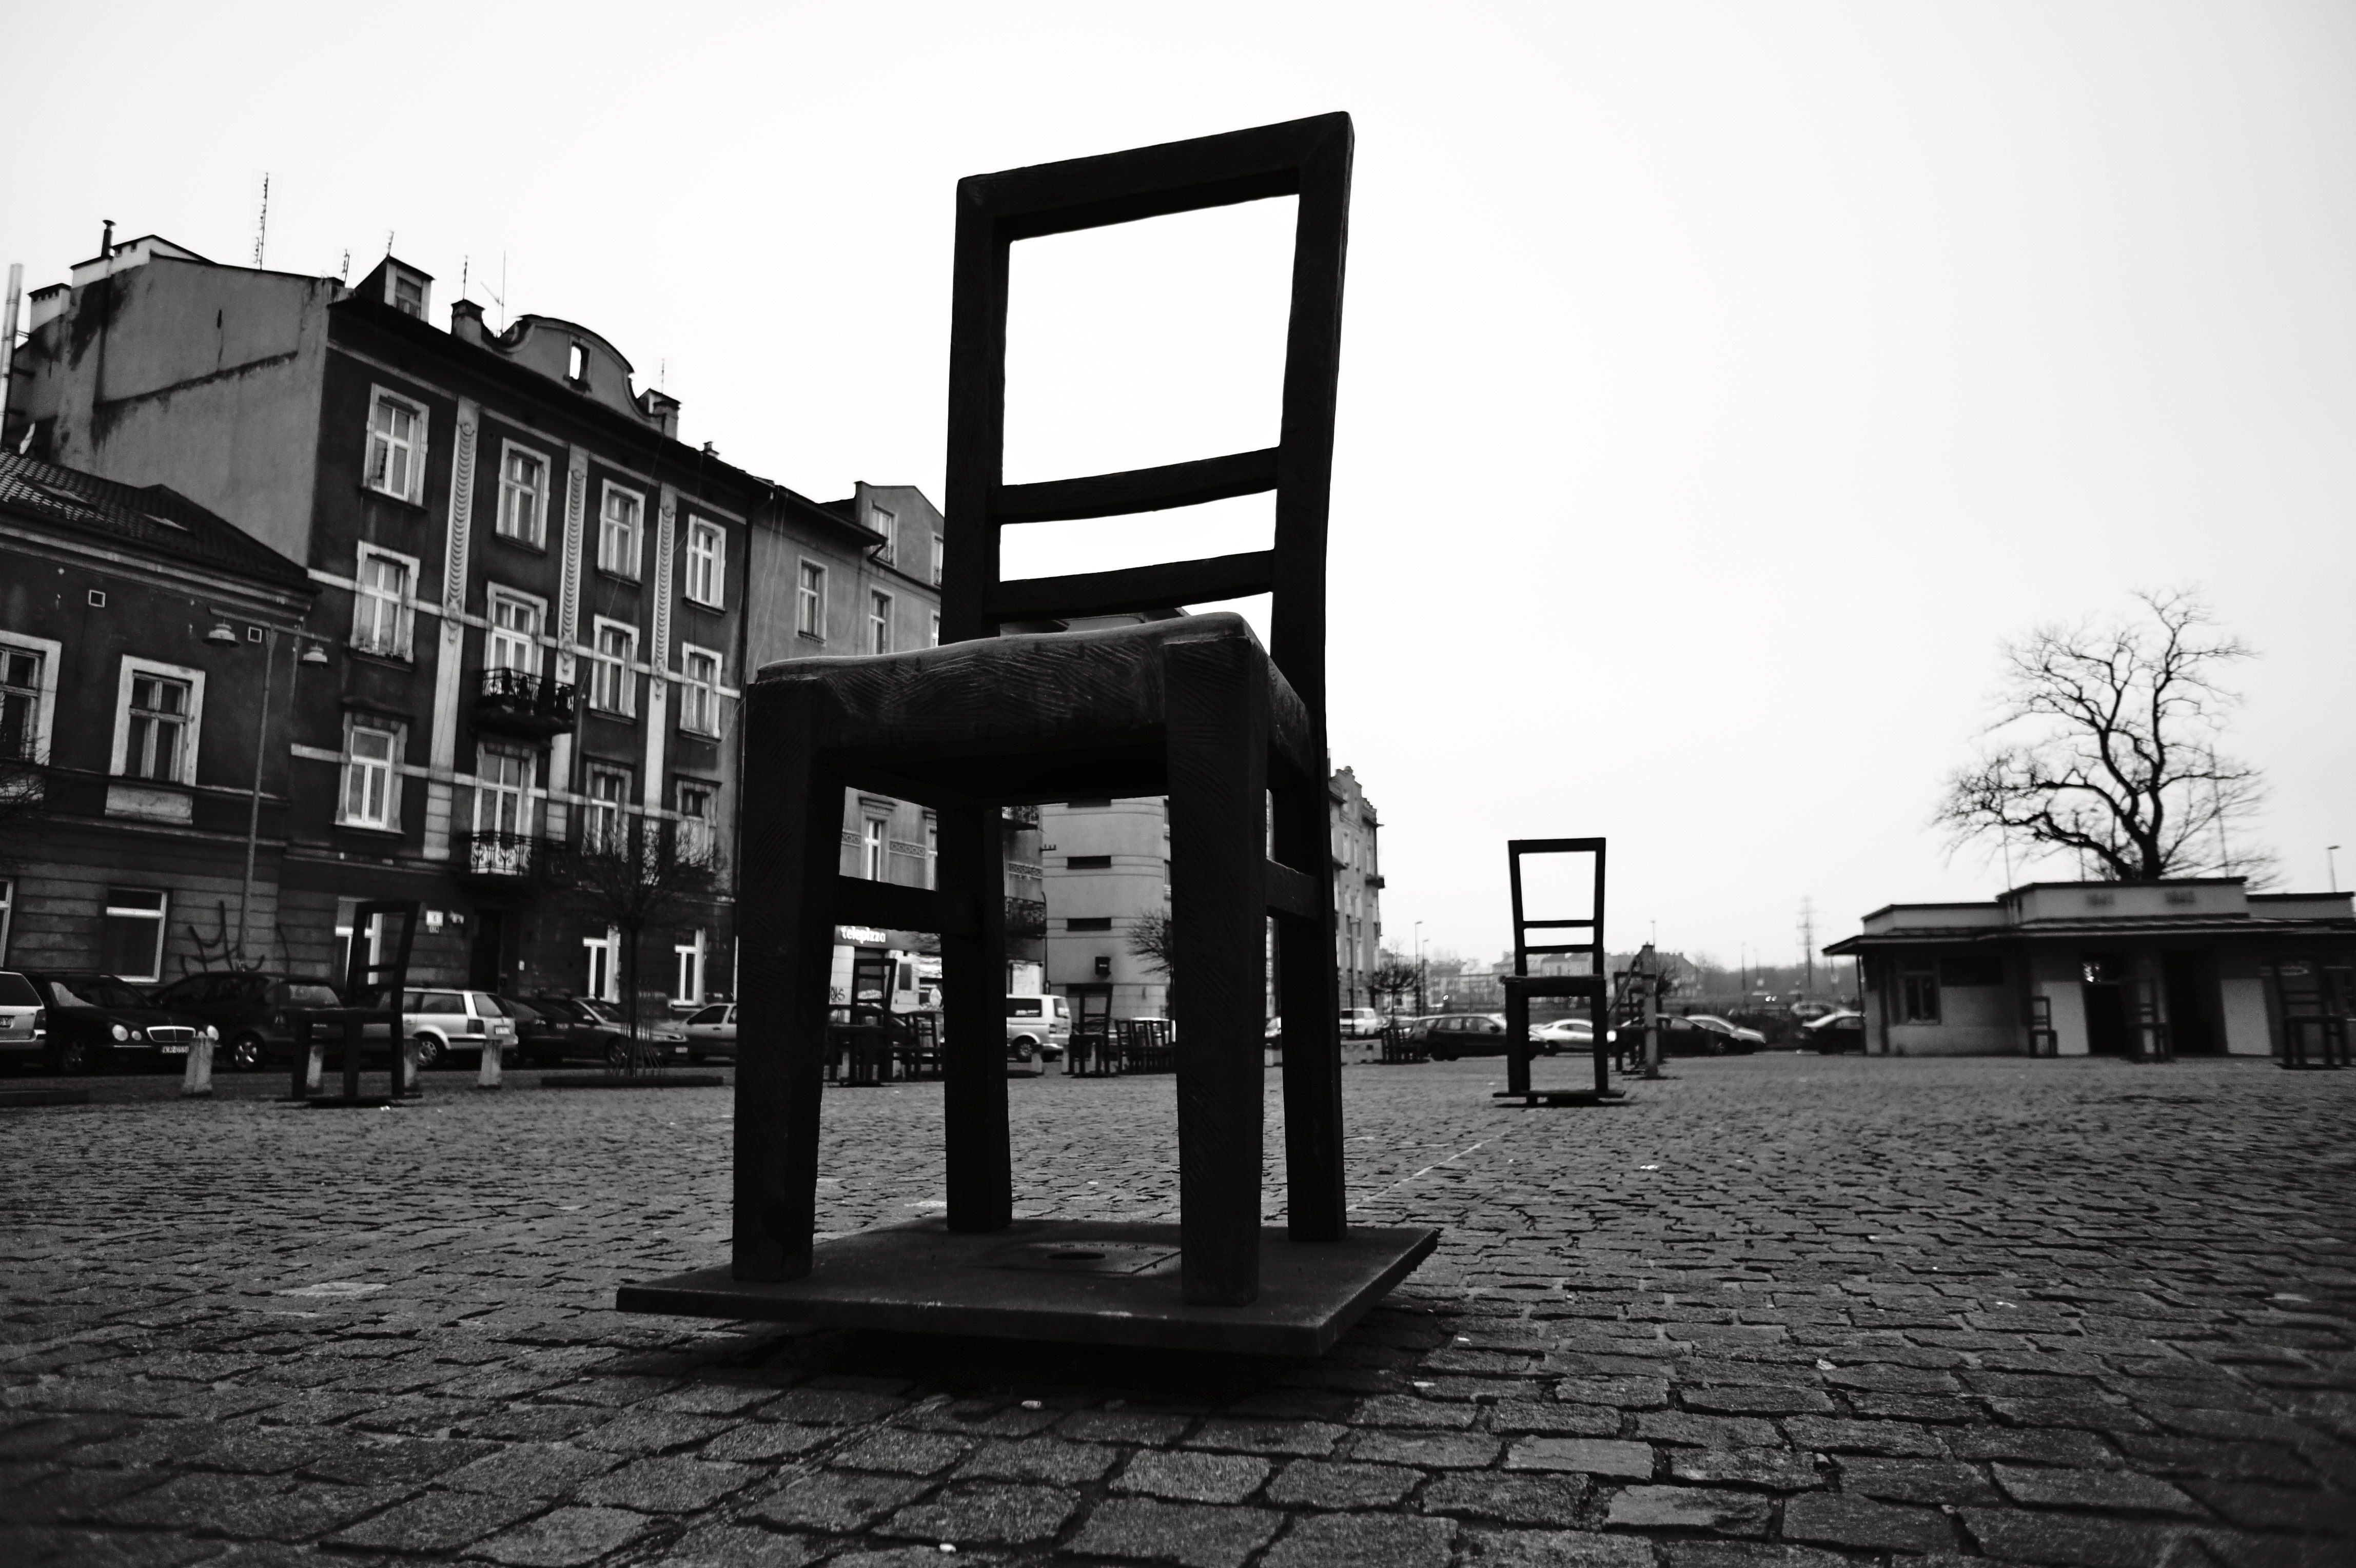 Krakow Ghetto and deportation memorial